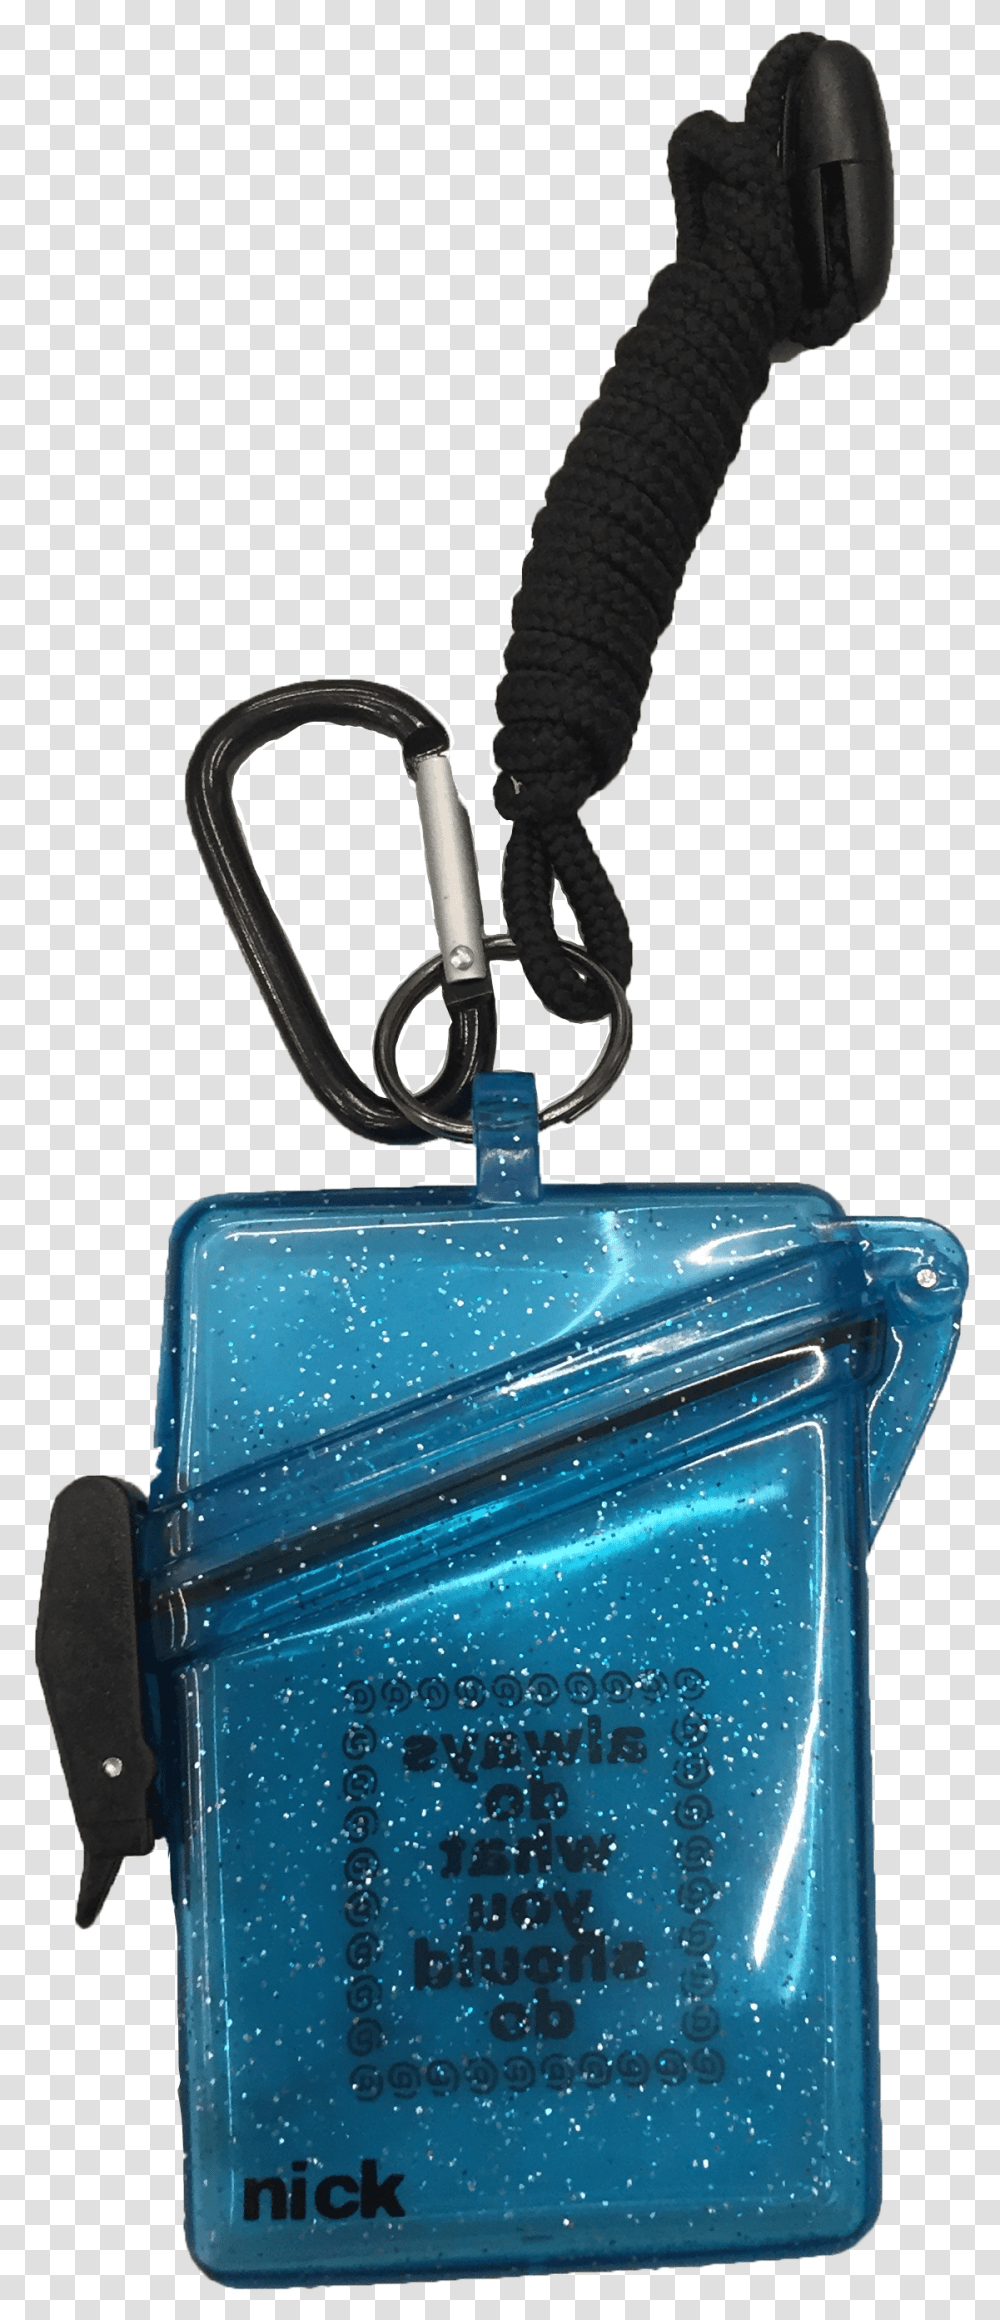 Download Hd Image Of Blue Glitter Case Wristlet, Electronics, Cowbell, Camera, Plant Transparent Png